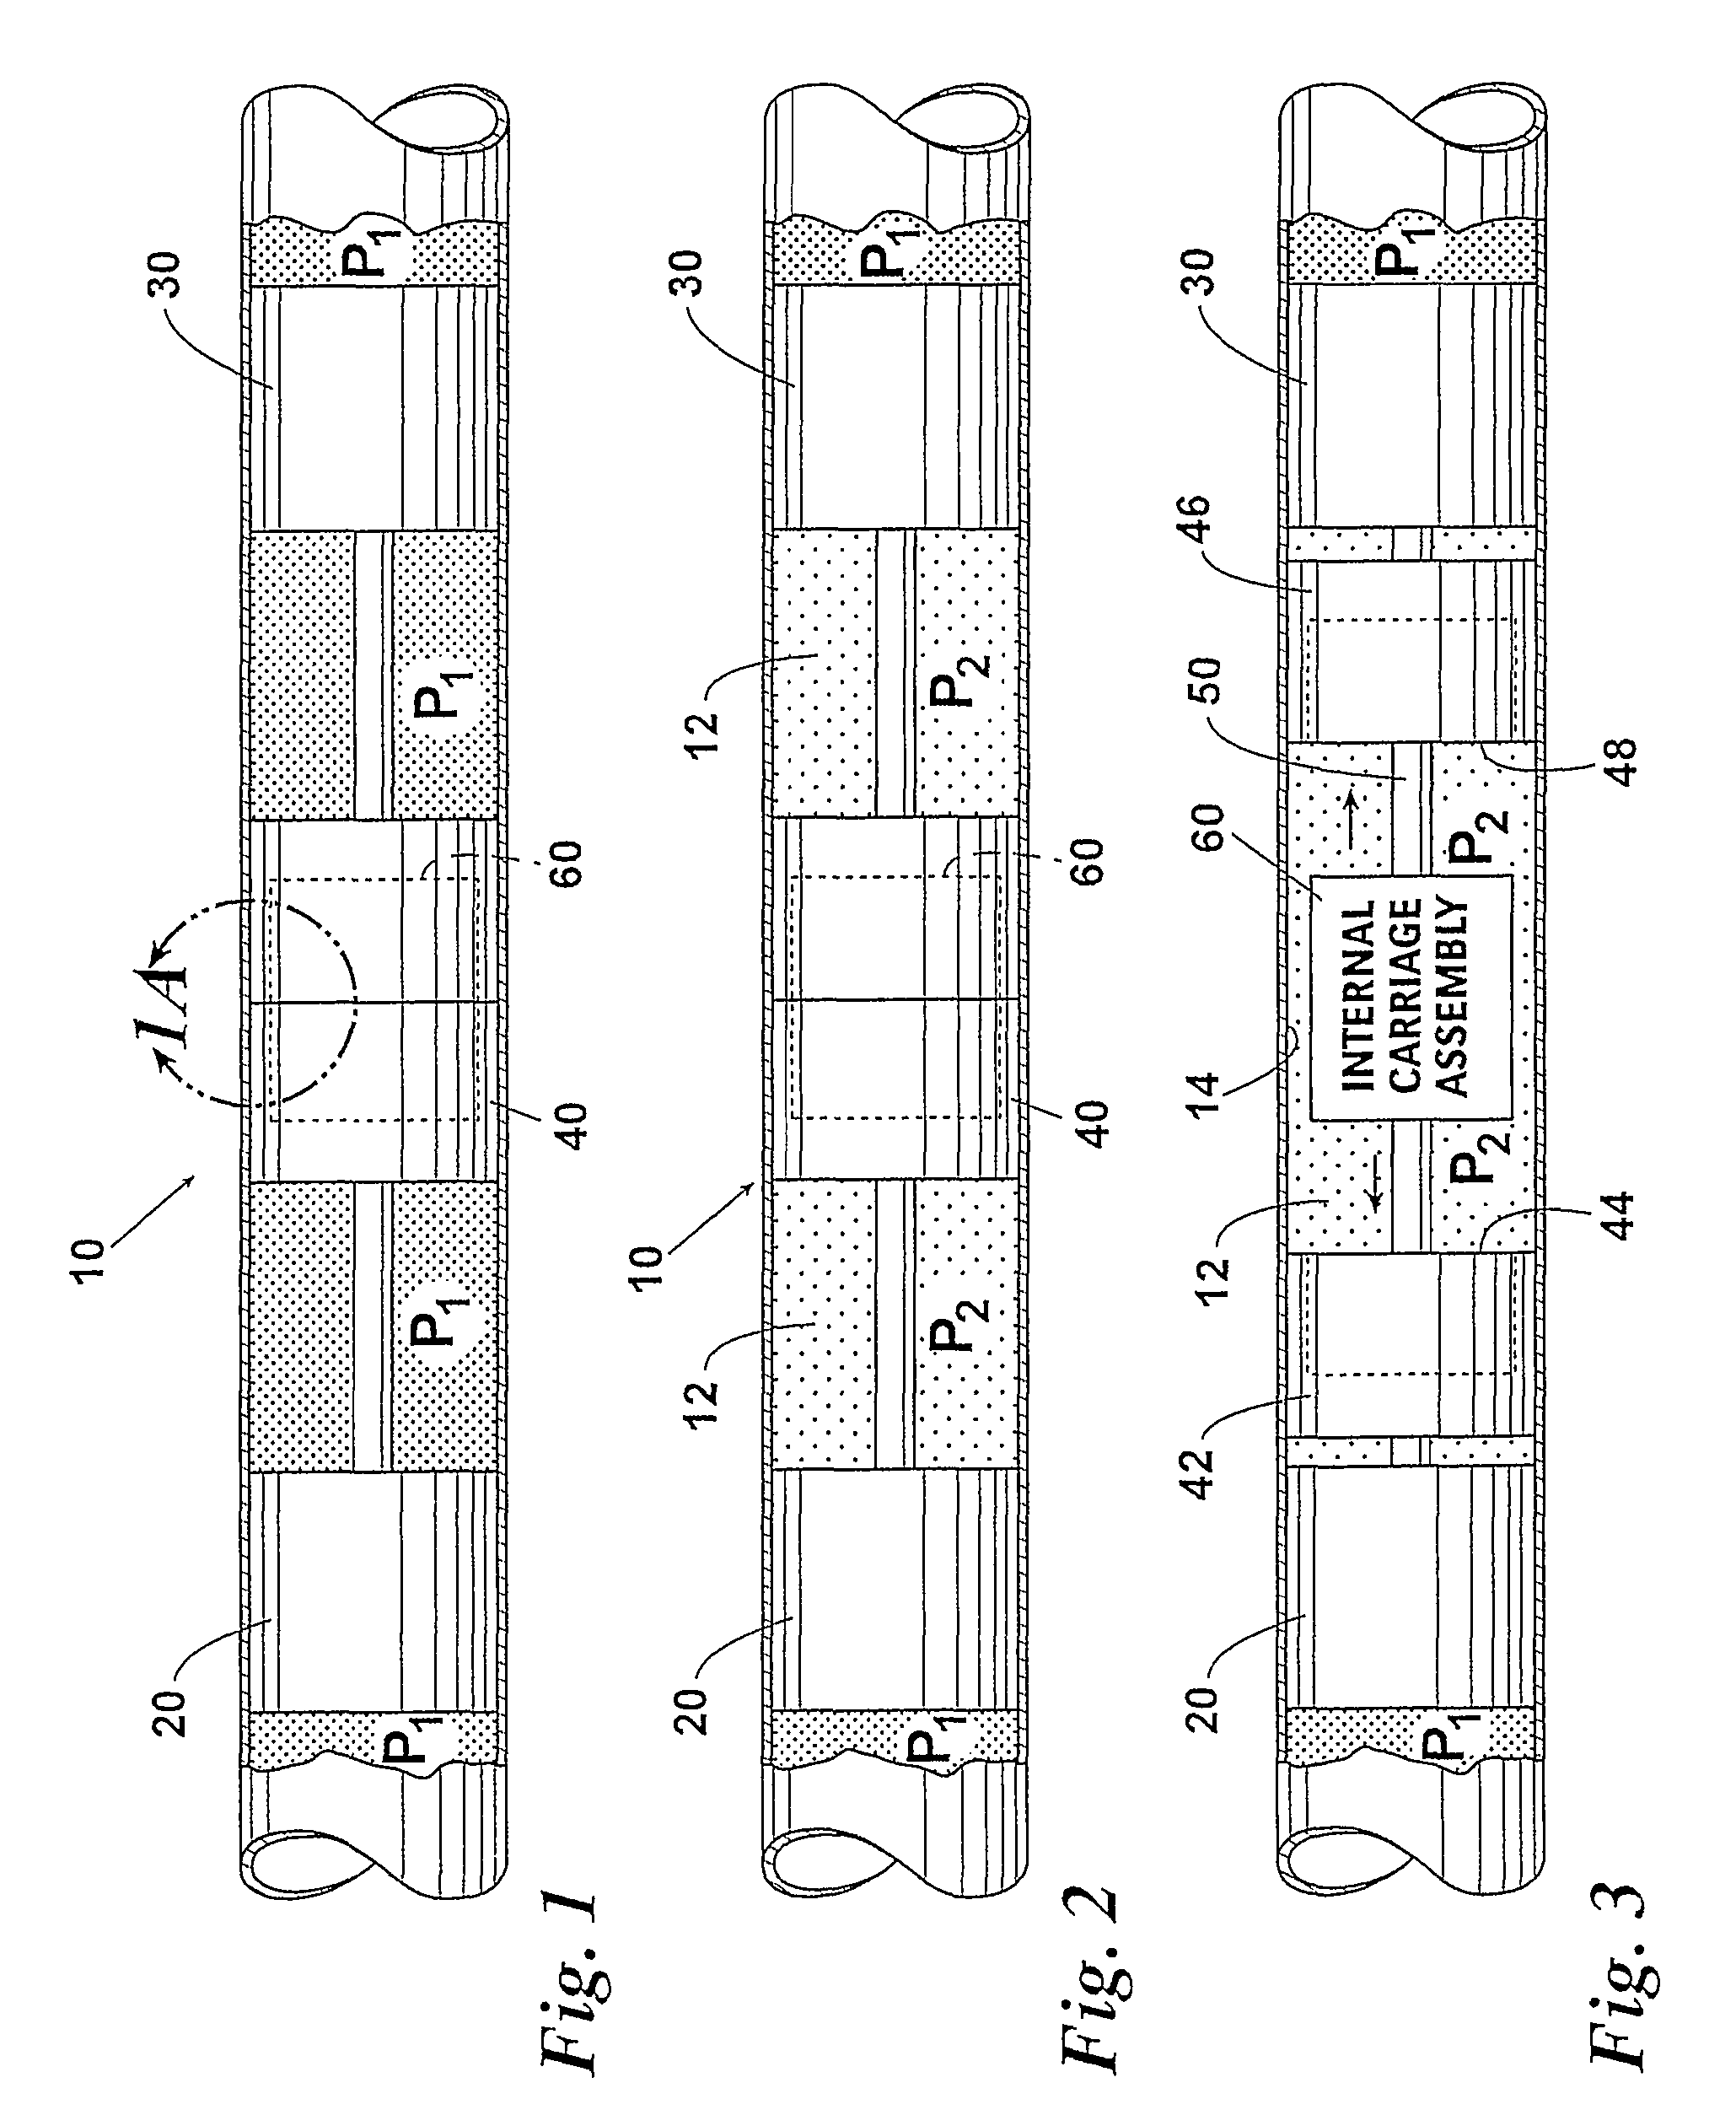 Internal composite repair apparatus